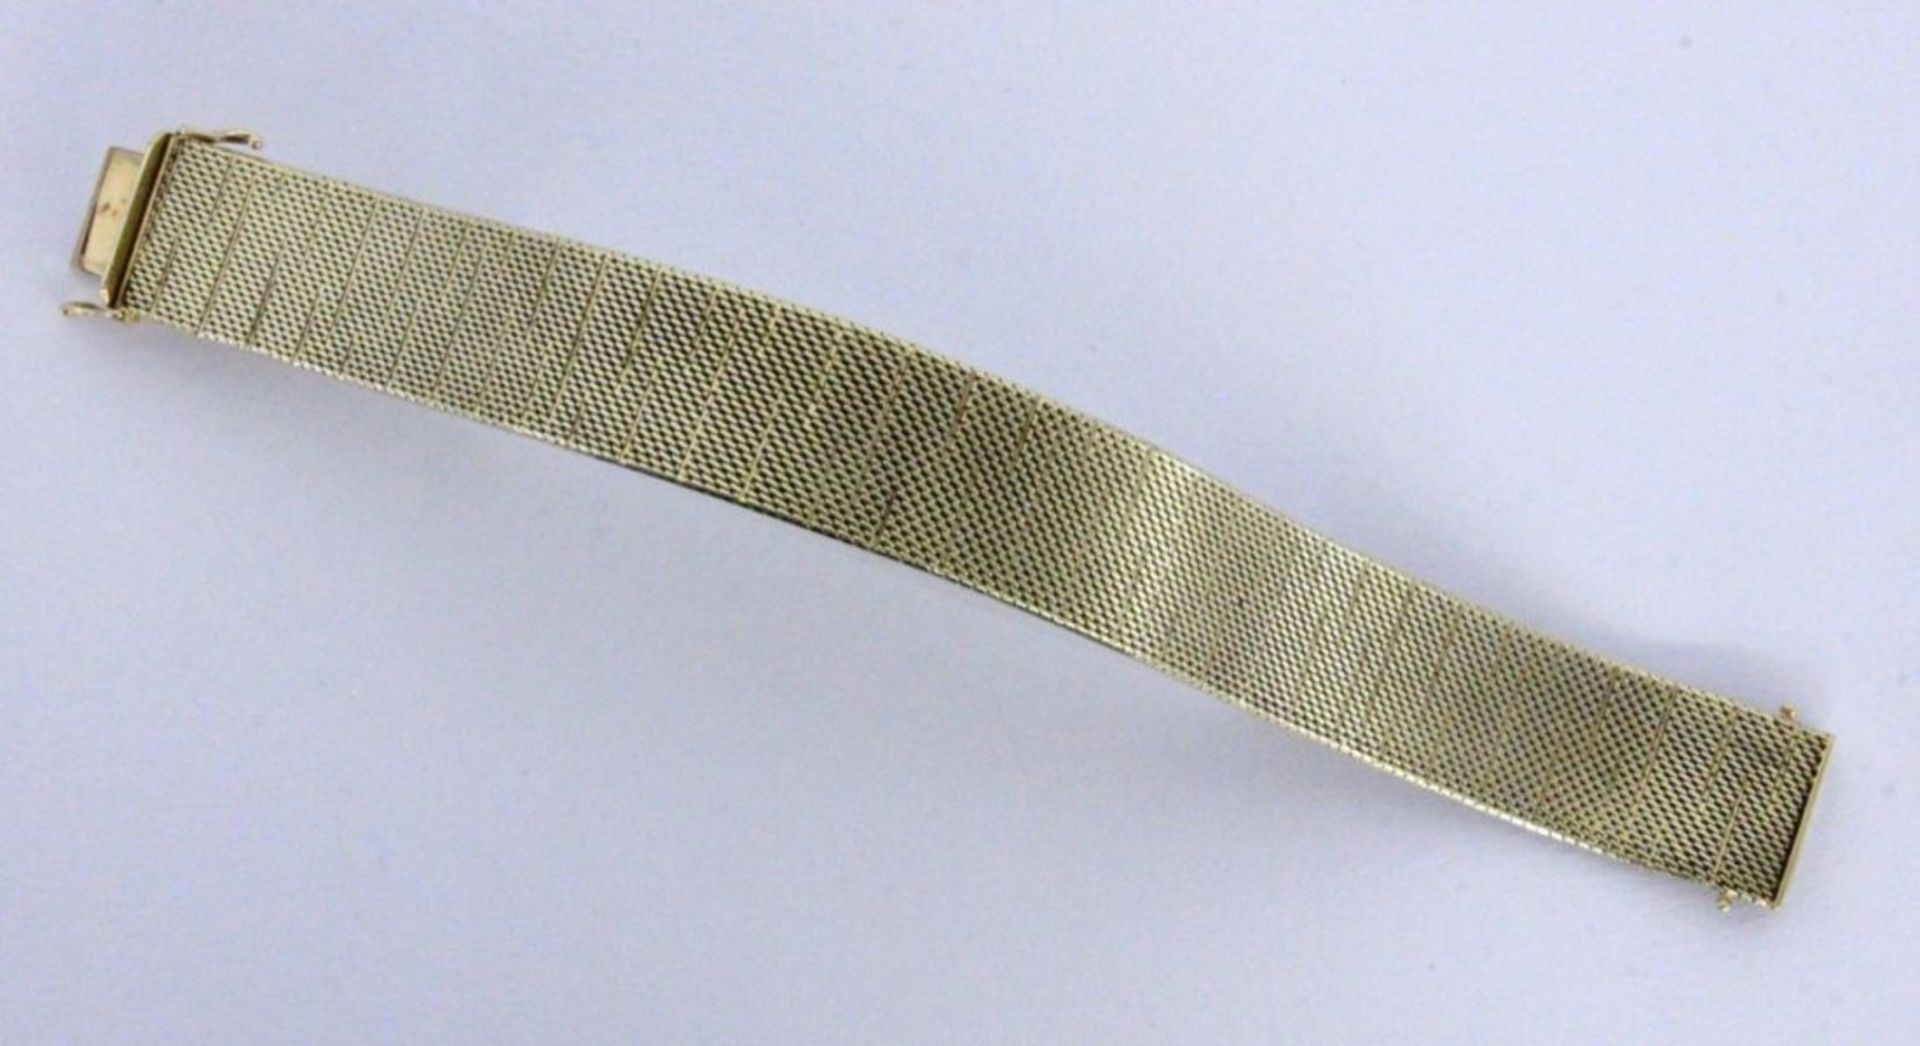 A BRACELET 585/000 yellow gold. 19 cm long, width 1.5 cm. Approx. 35 grams. Keywords: